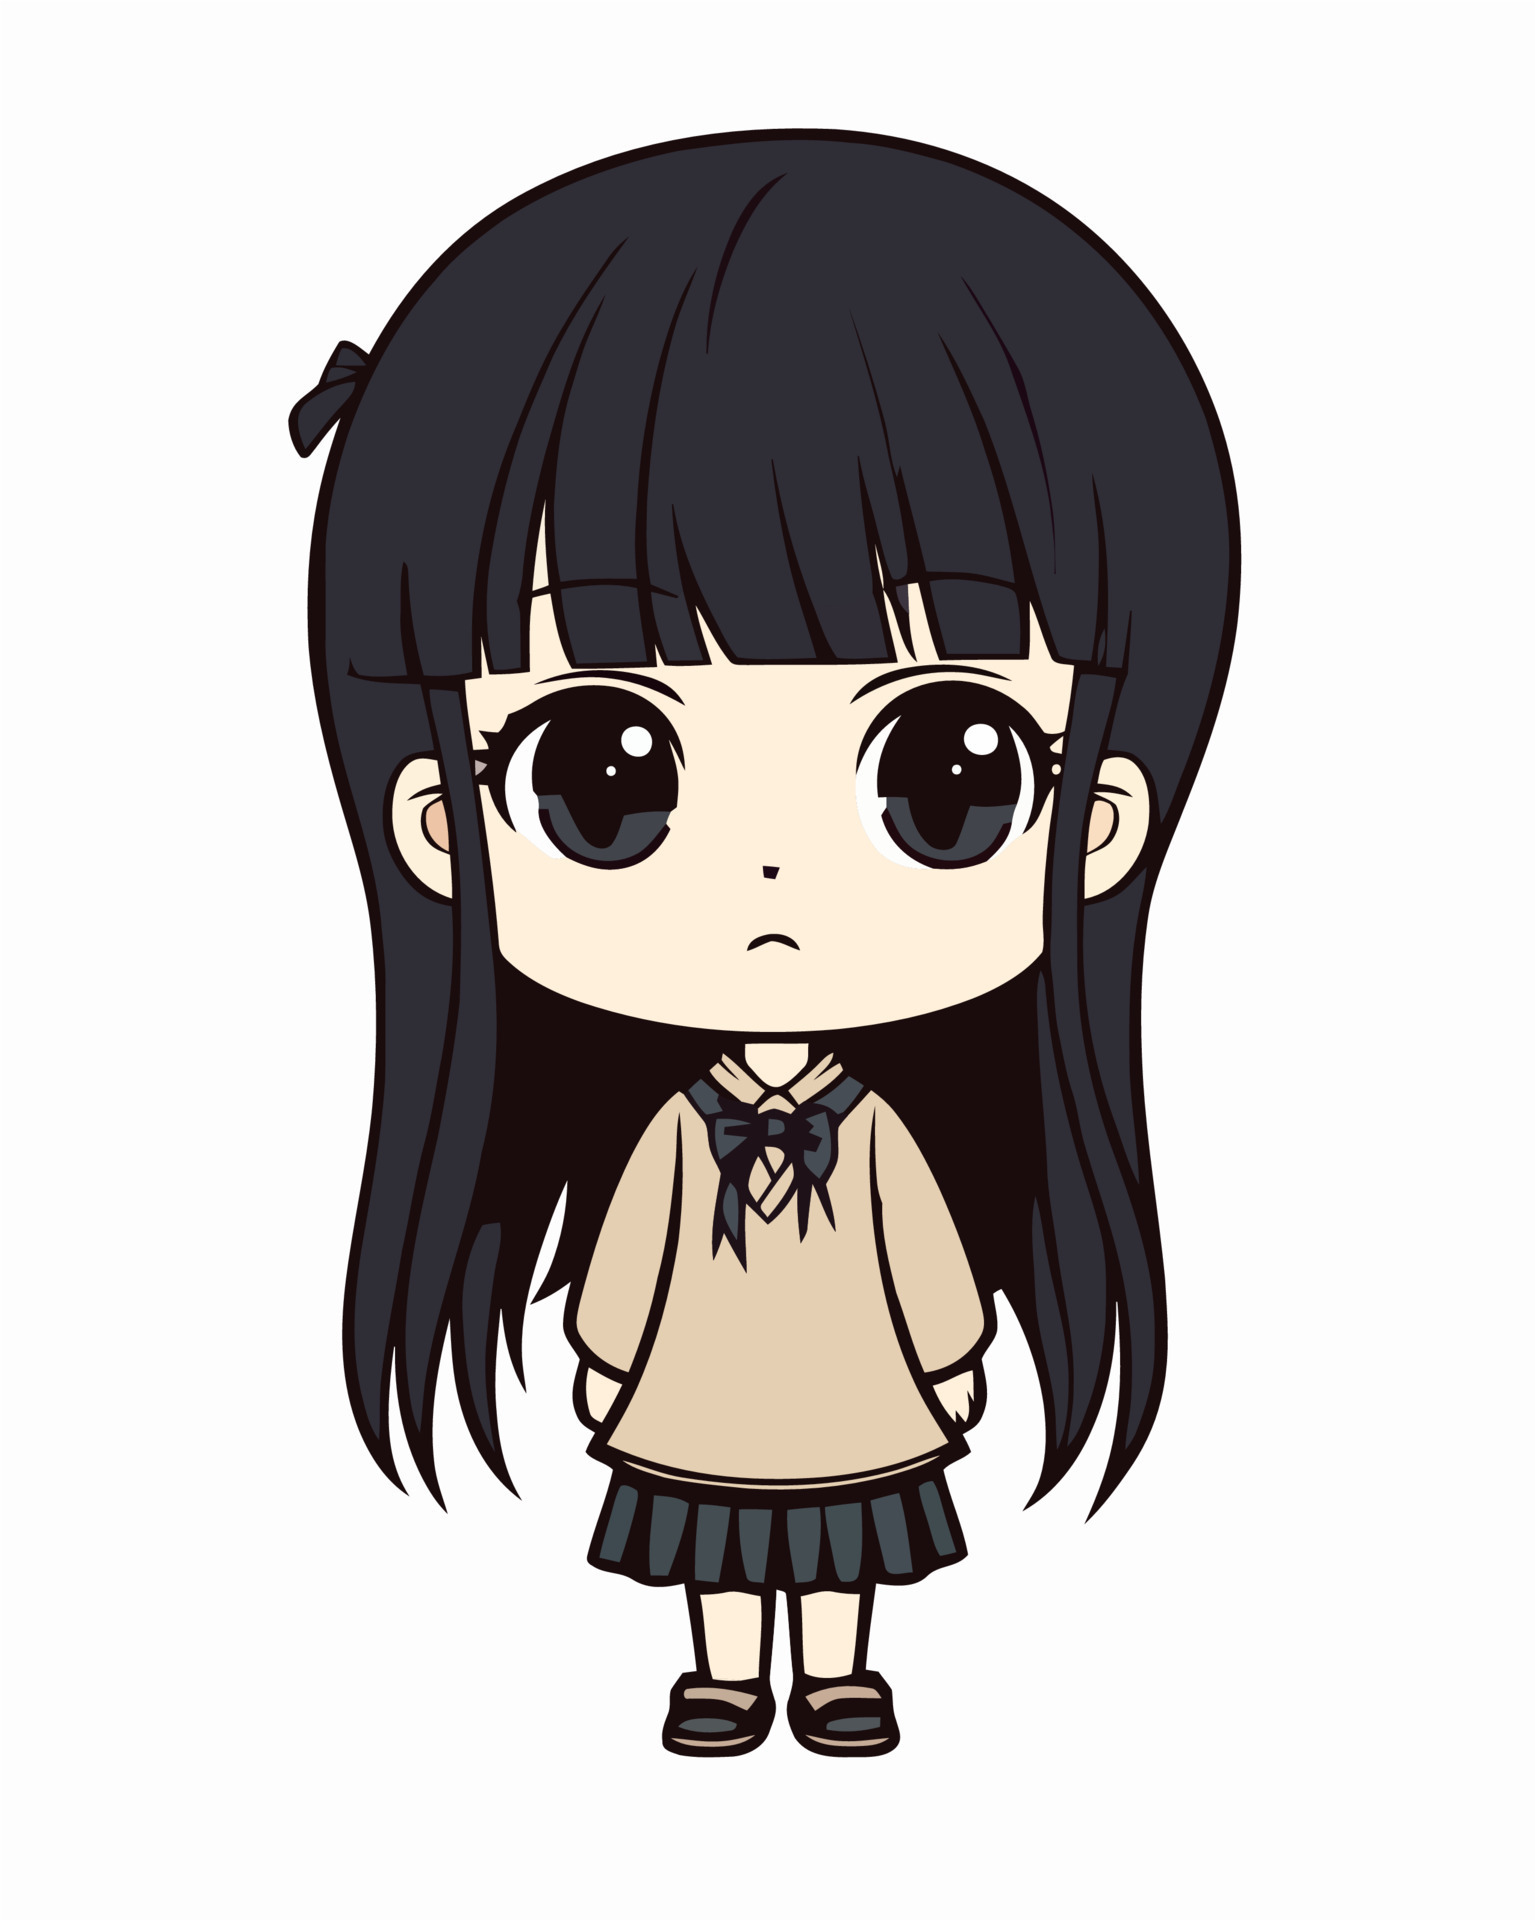 Mini Chibi Anime Girl 22695192 Vector Art at Vecteezy